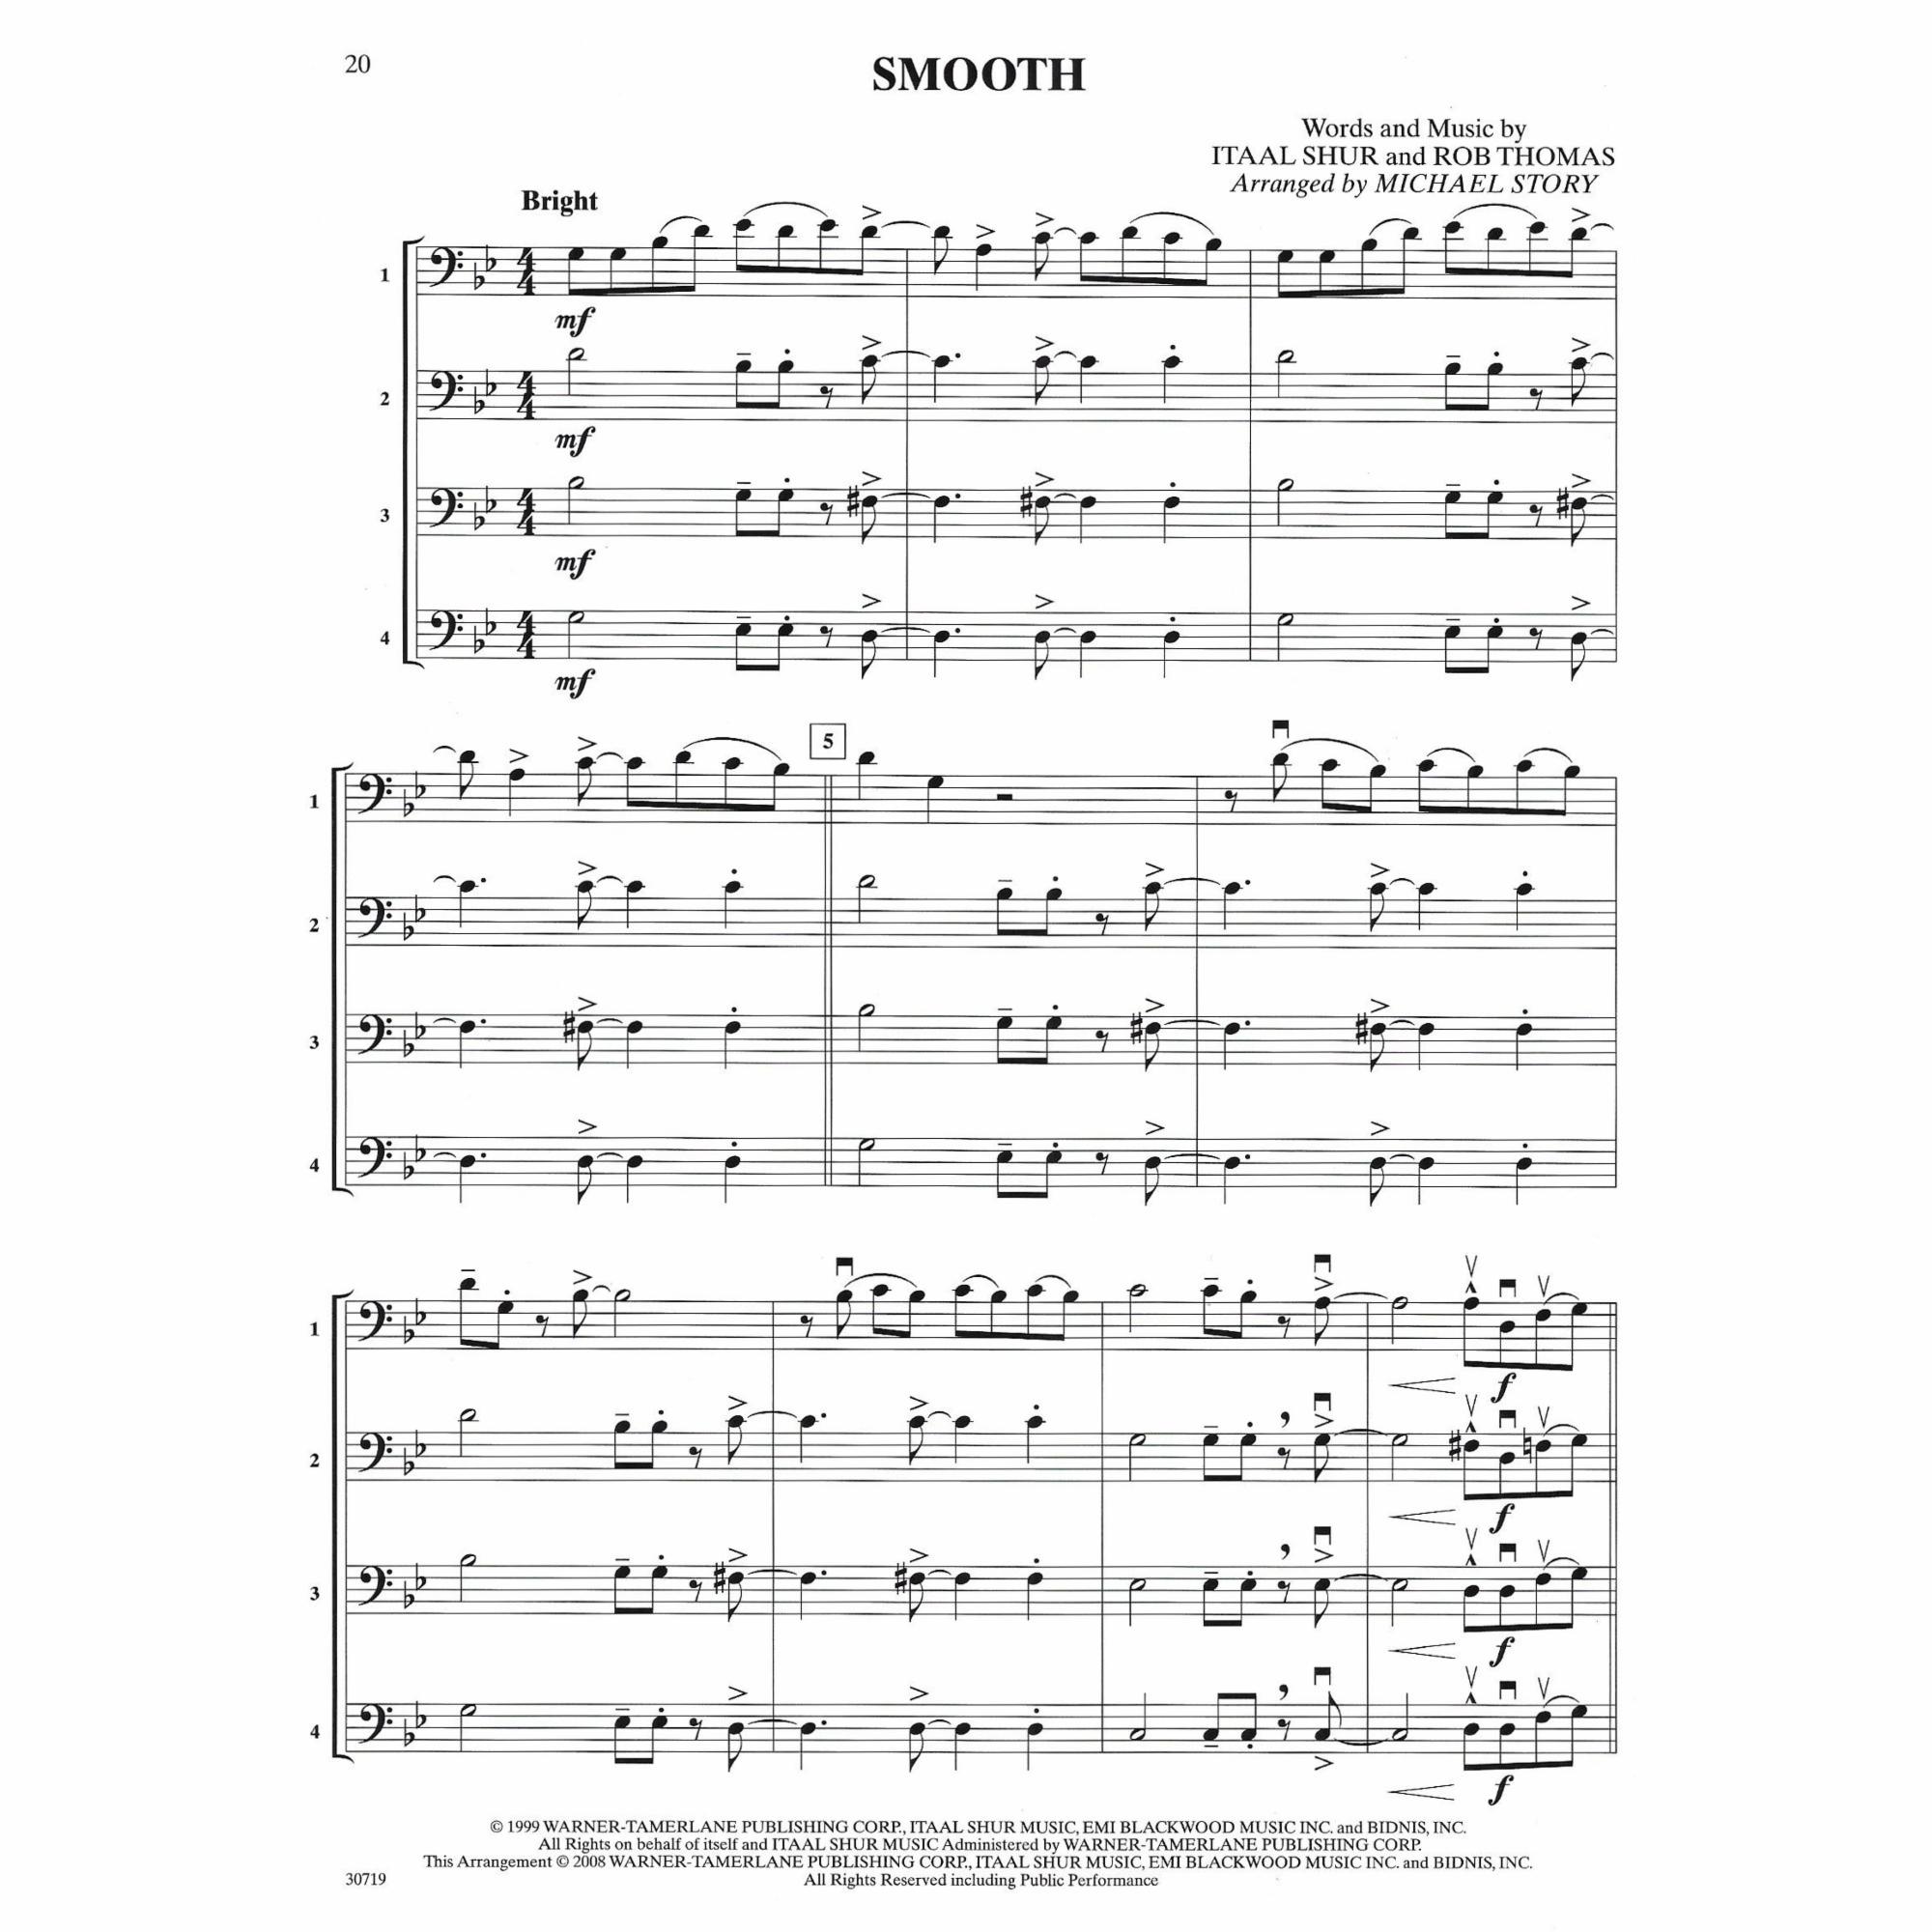 Sample: Four Cellos (Pg. 20)